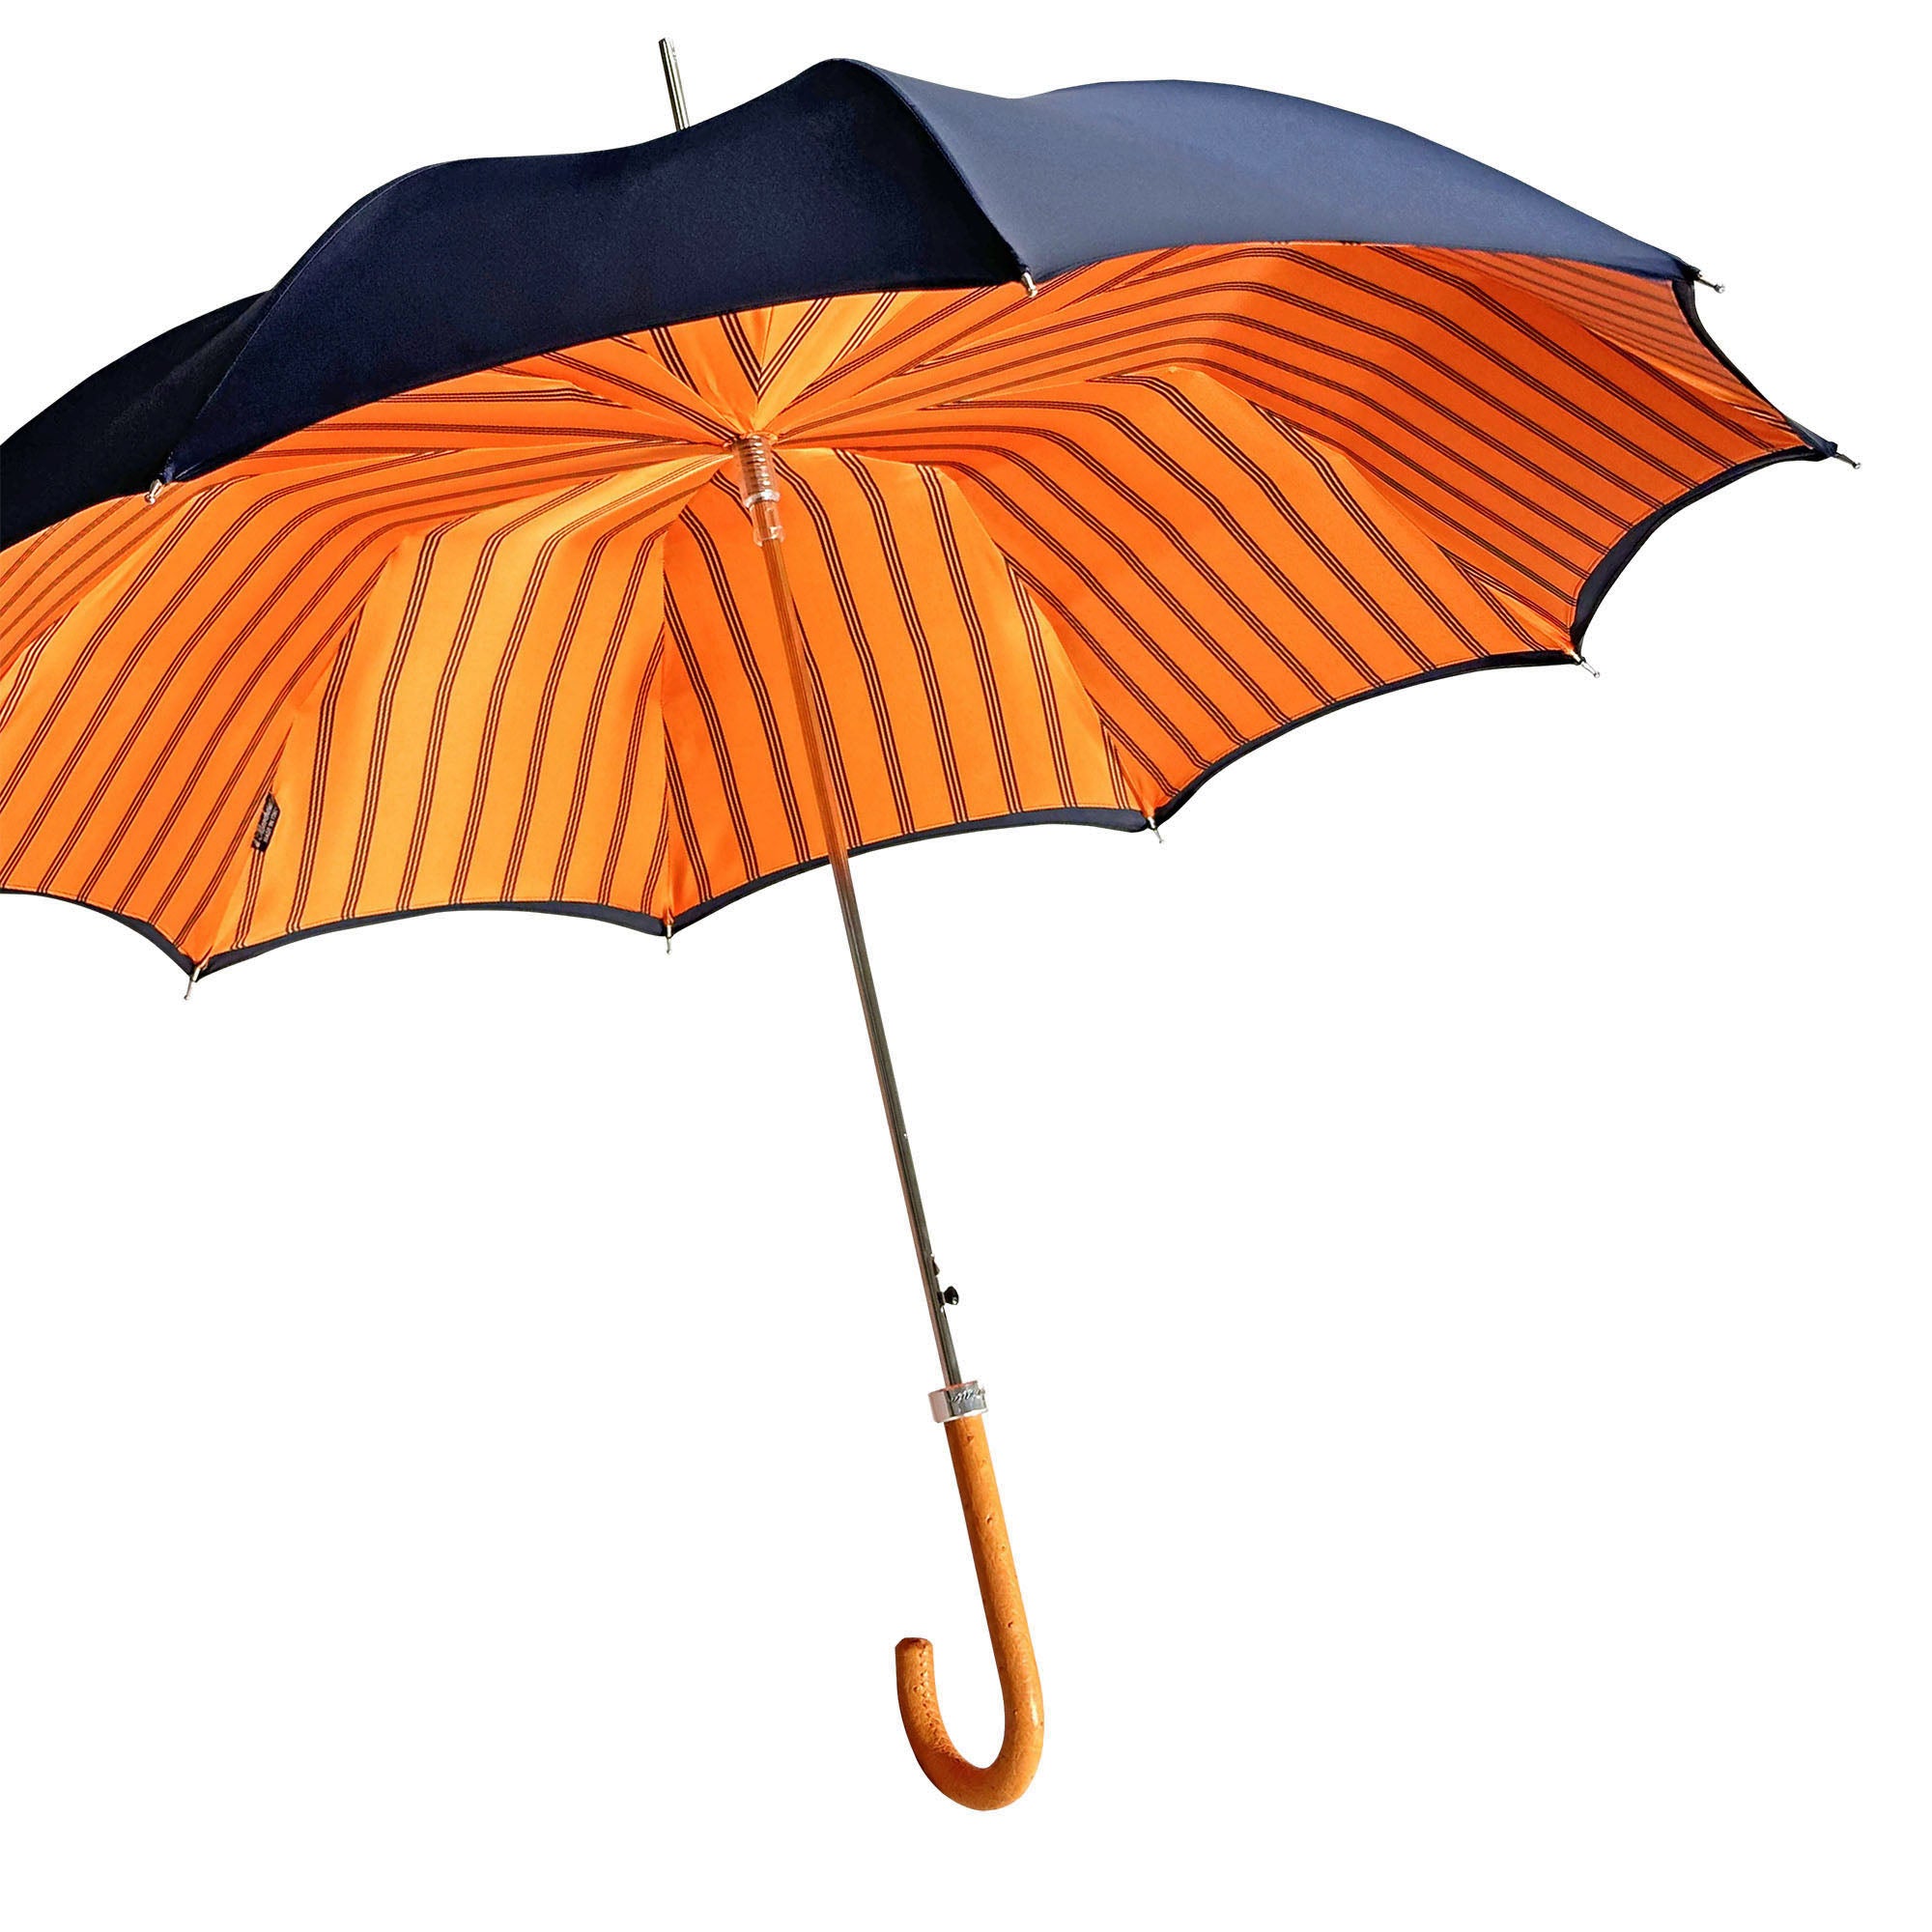 Elegant Man's umbrella with orange ostrich leather handle